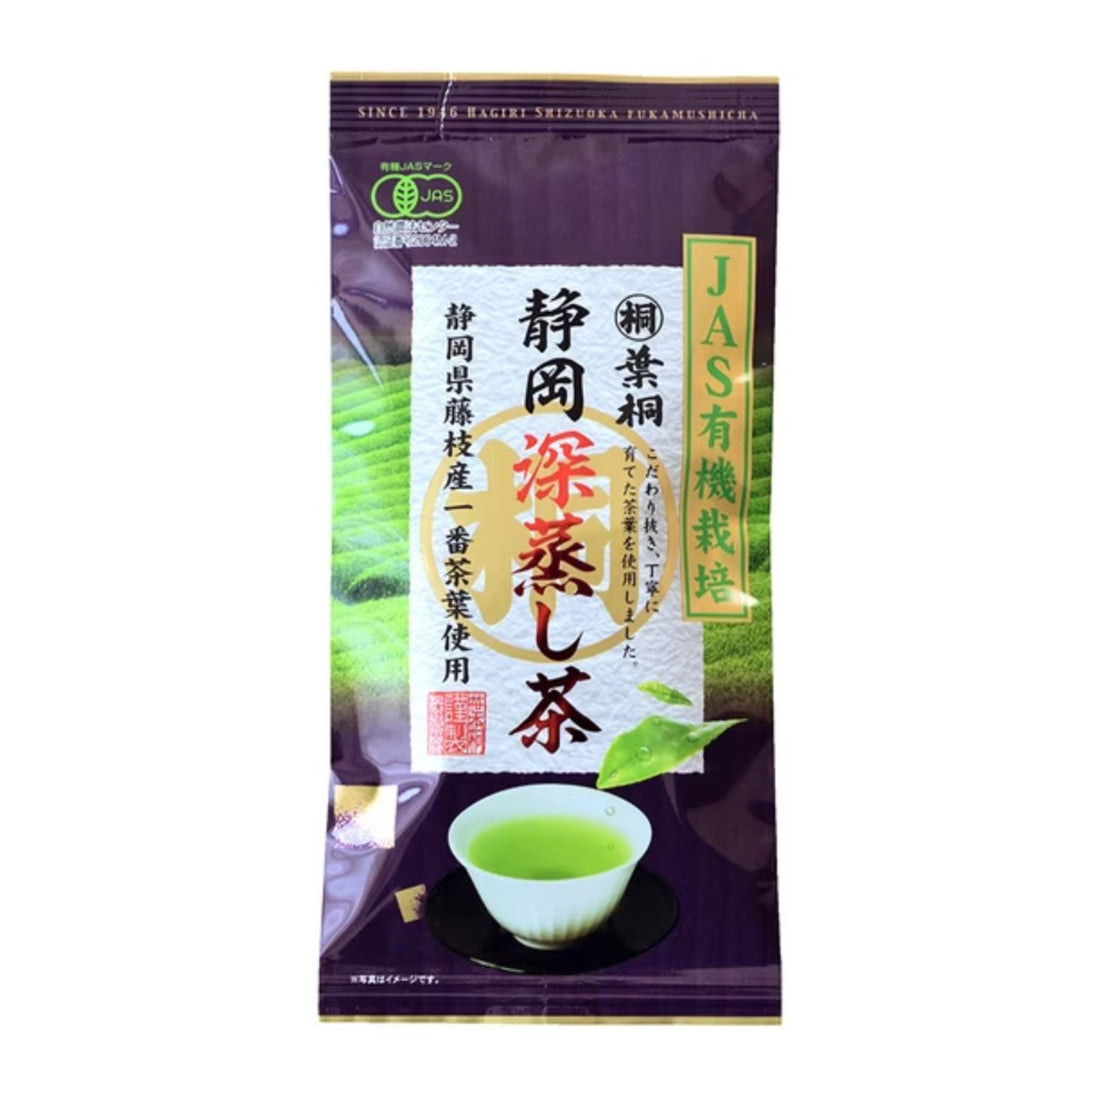 Hagiri organically grown Shizuoka deepsteamed tea 100g - NihonMura